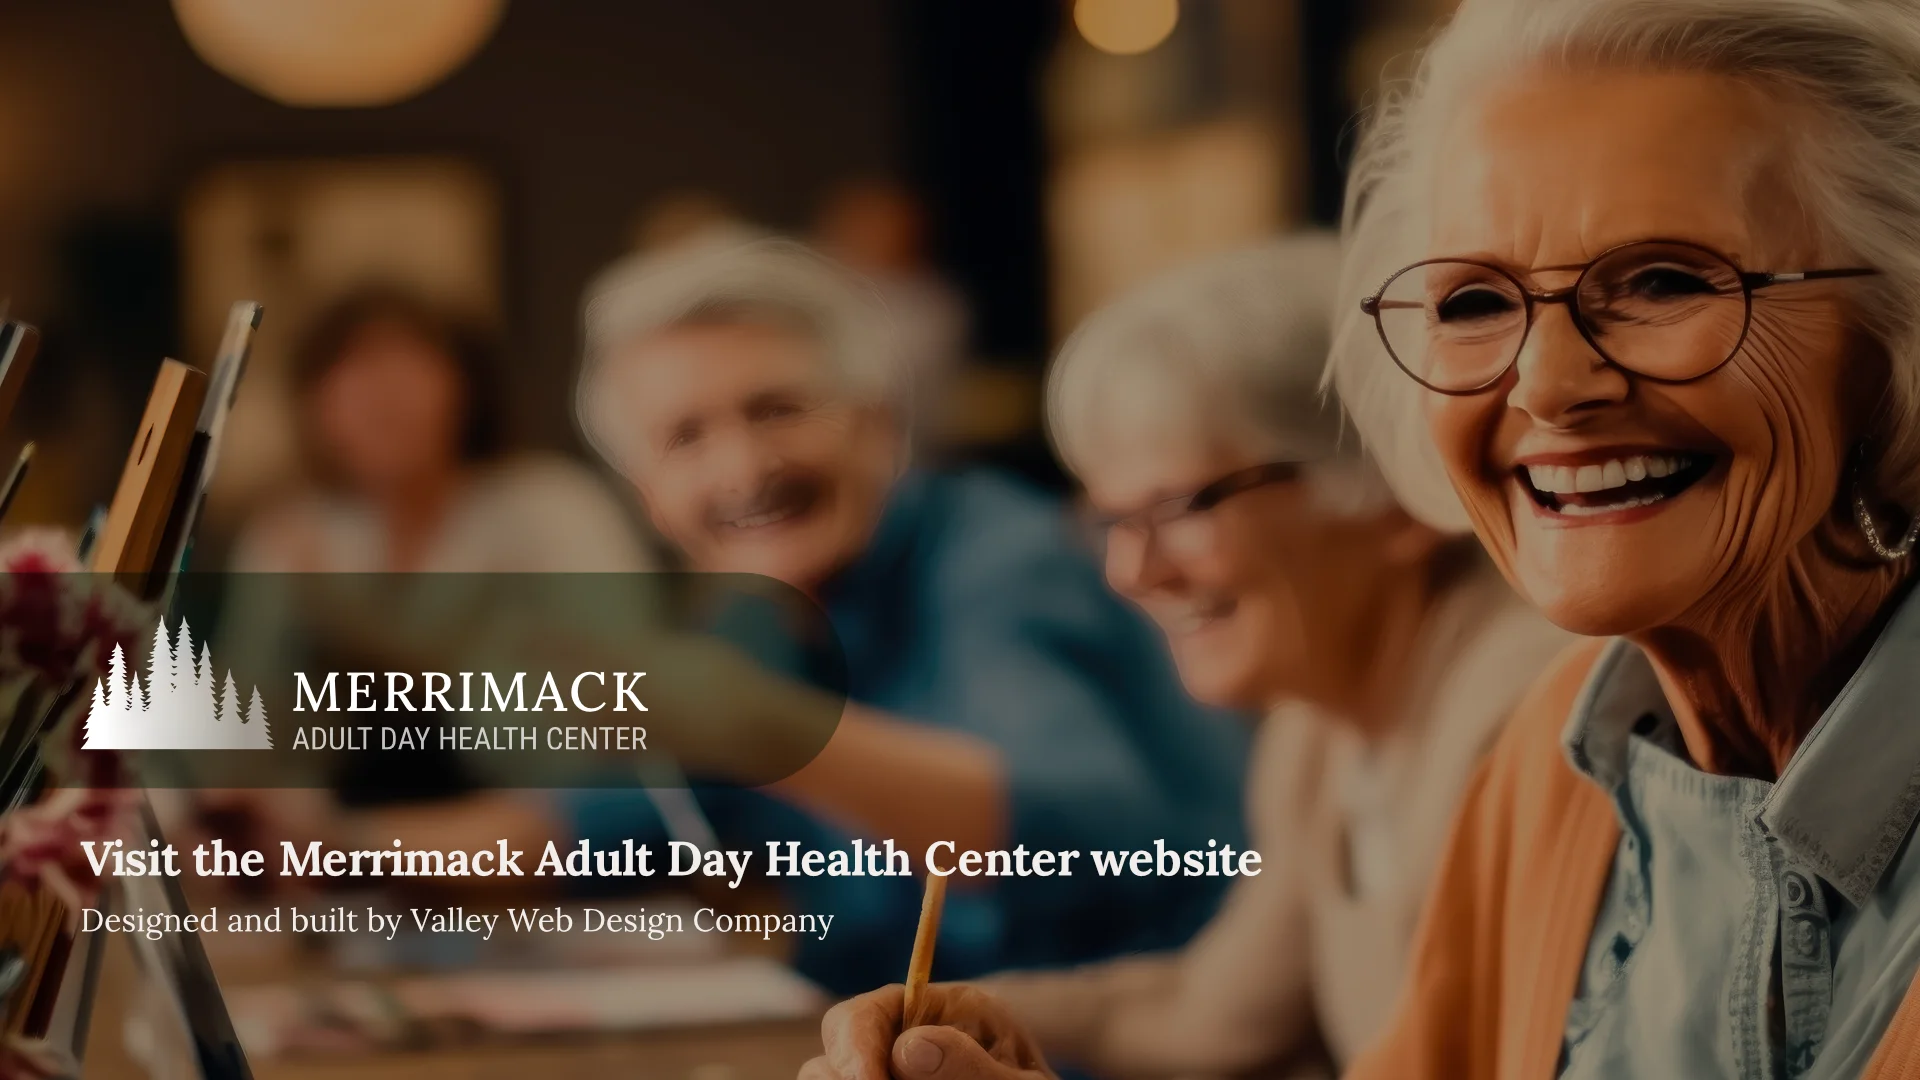 Merrimack Adult Day Health Center